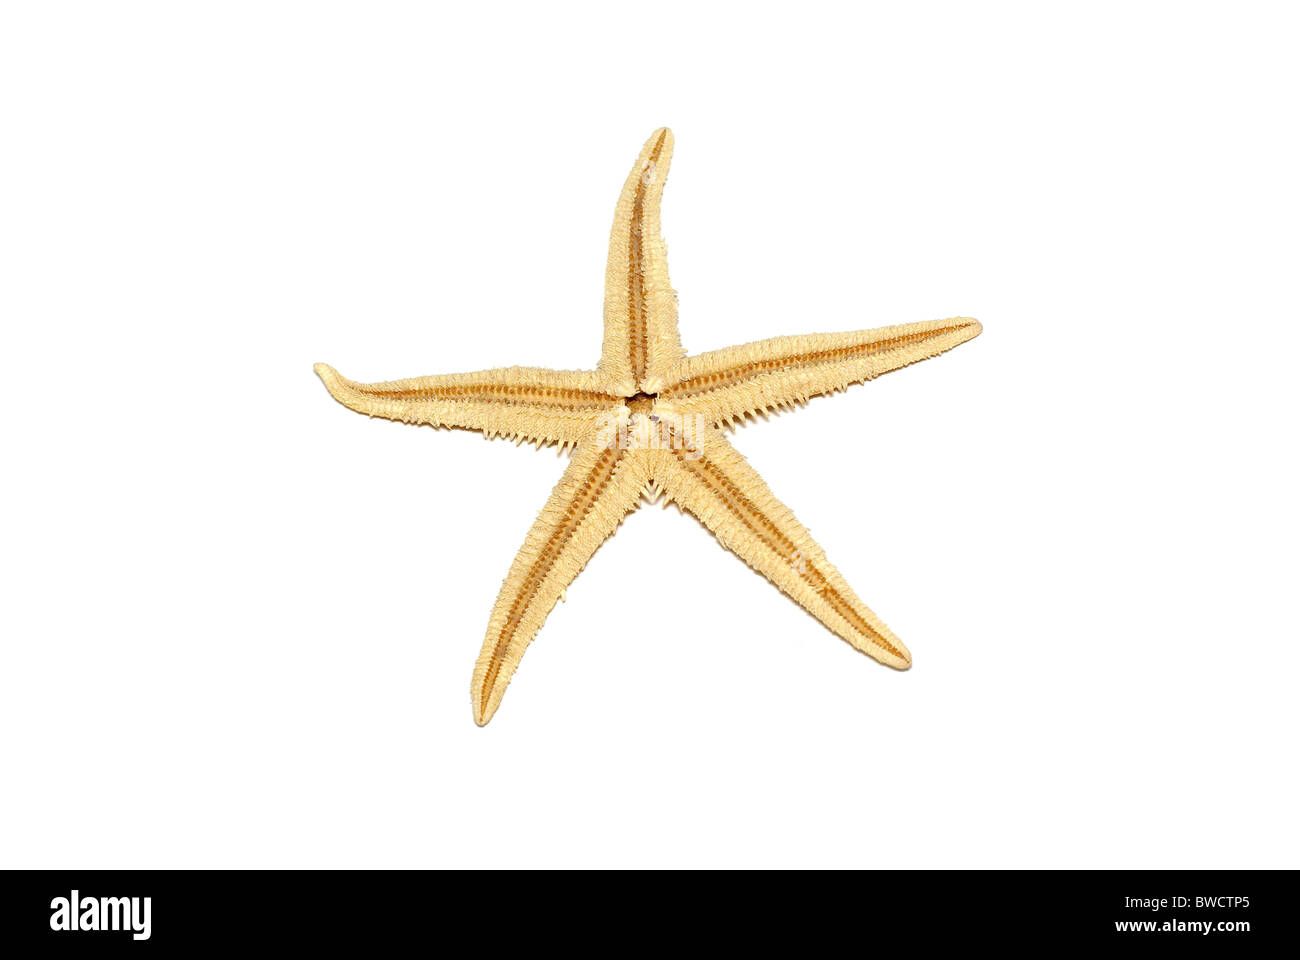 Starfish isolated on white background. Stock Photo